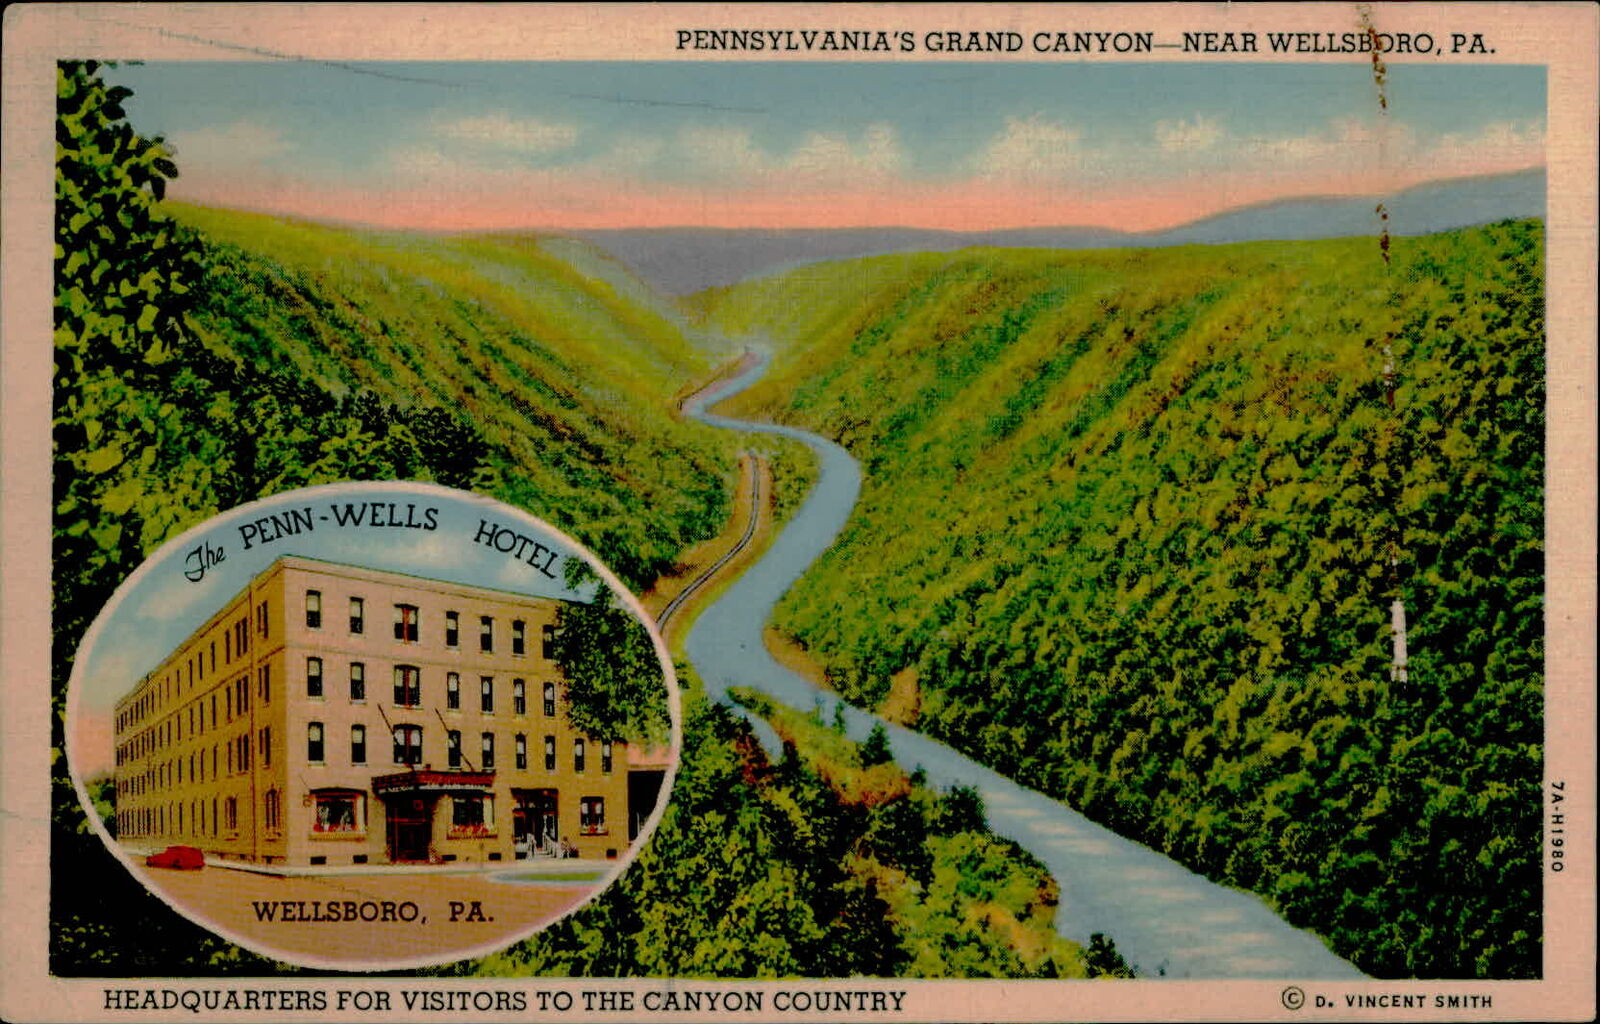 Postcard: The PENN-WELLS LIA HOTEL WELLSBORO, PA. PENNSYLVANIA\'S GRAND